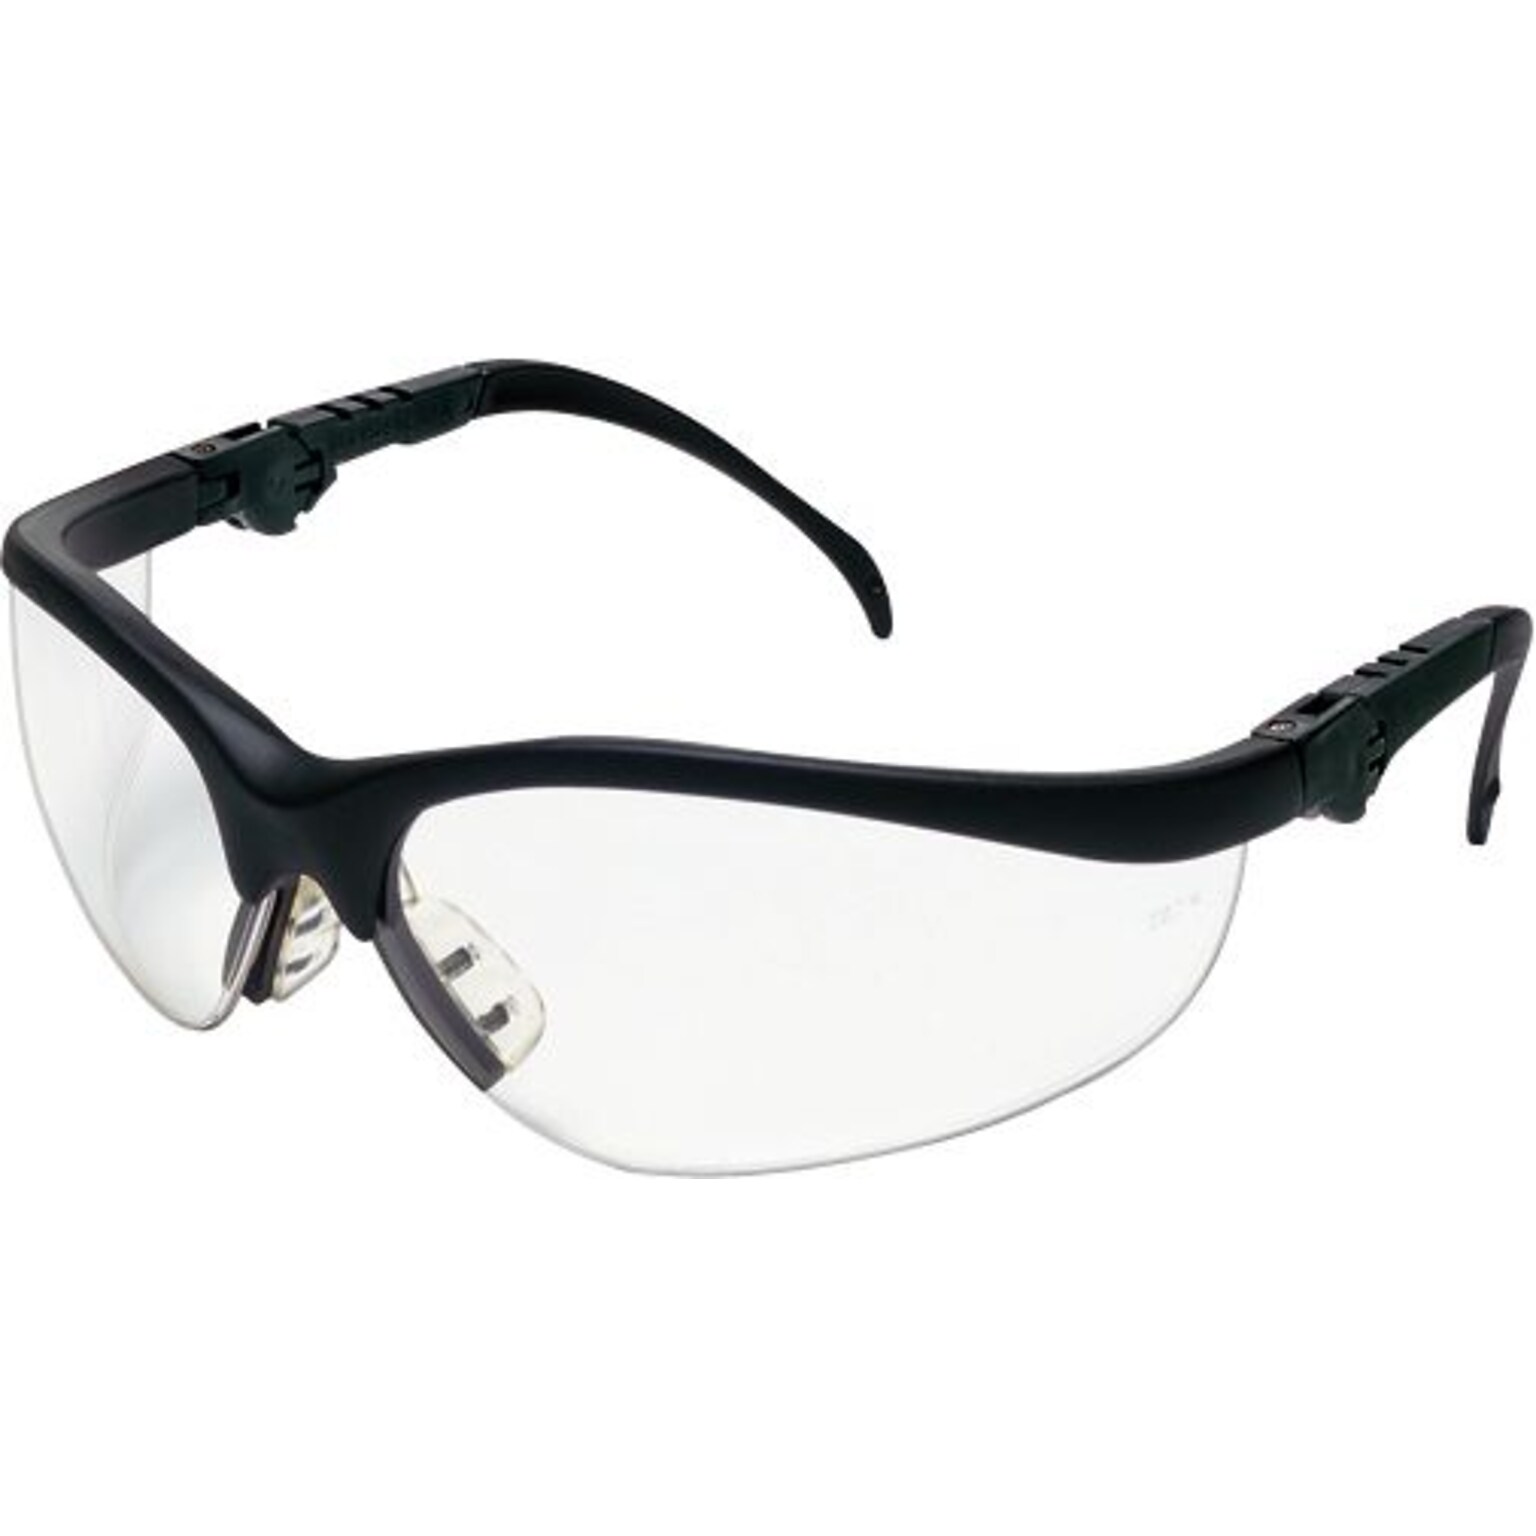 Crews Klondike Plus Safety Glasses, Clear Anti-Fog Lens (CRWKD310)